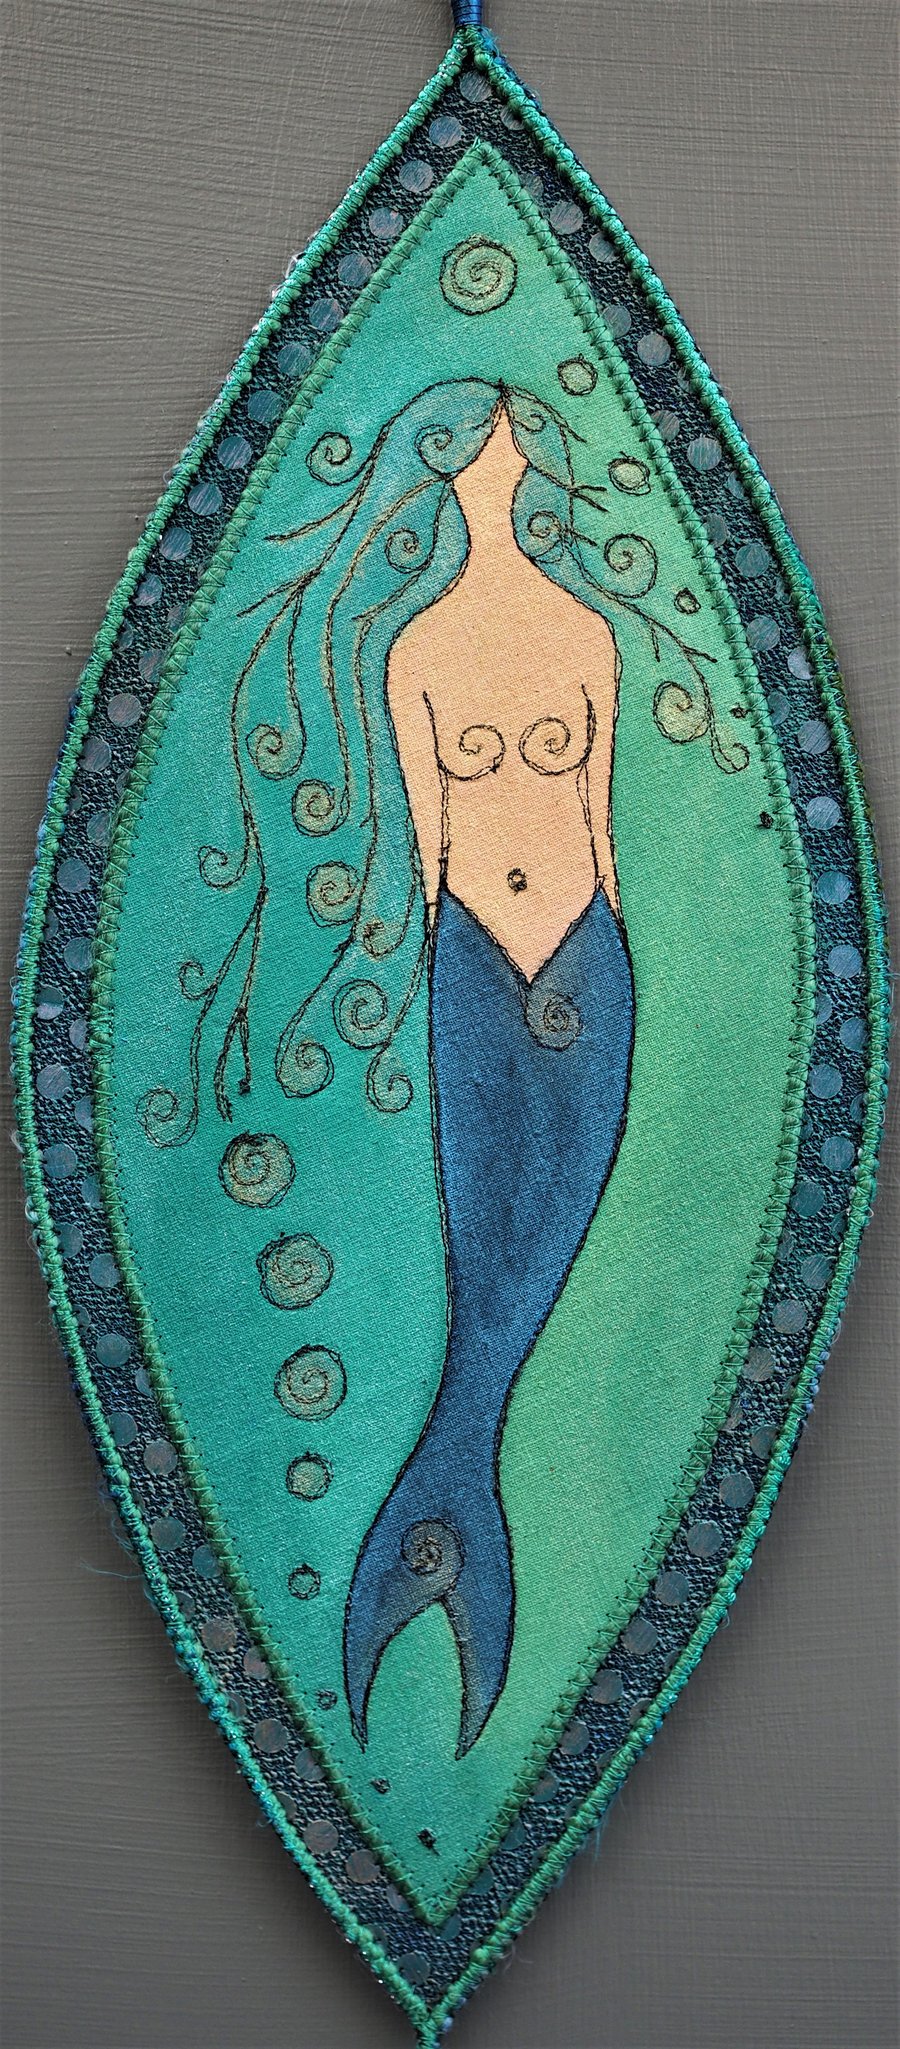 MAE001 - Mermaid Embroidery Wall Hanging - 15cm x 35cm - Jade - Blue - Black